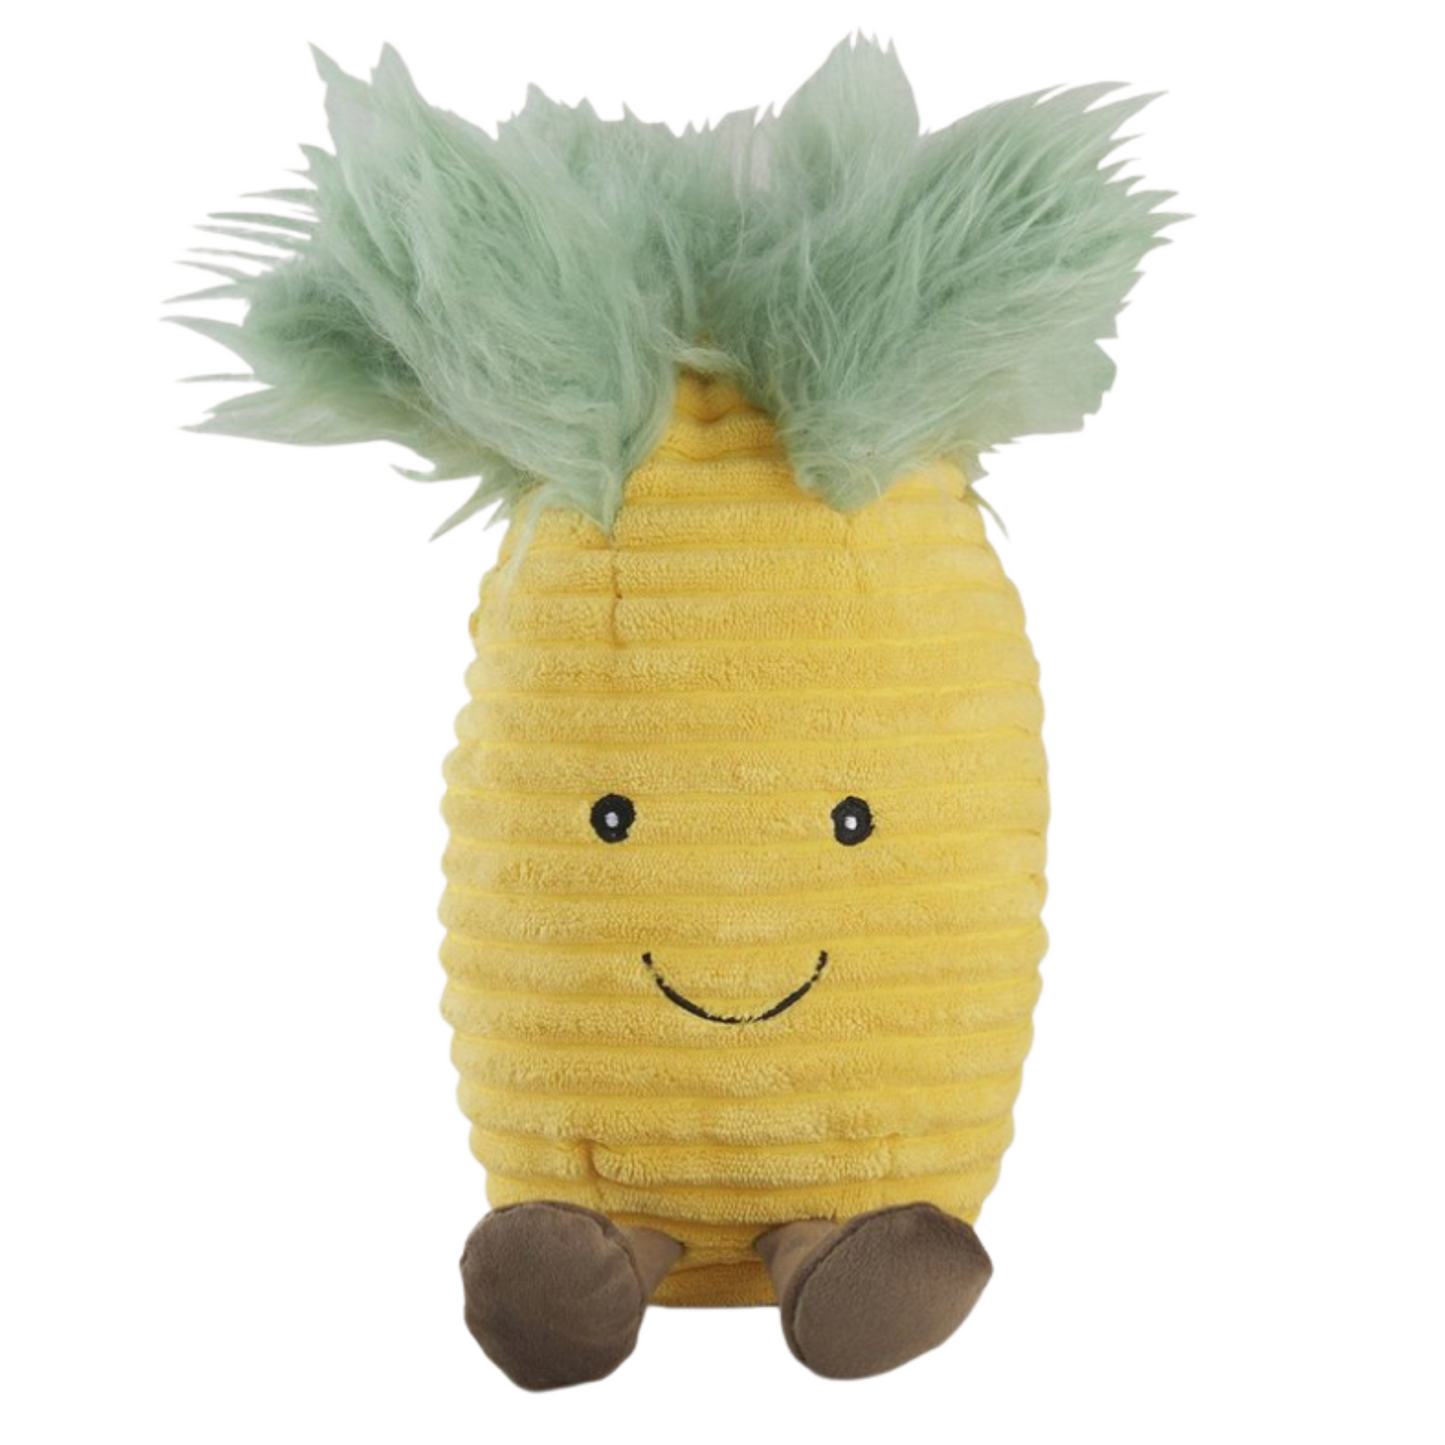 Nandog Pet Gear Pineapple Soft Plush Squeaky Stuffed Toy